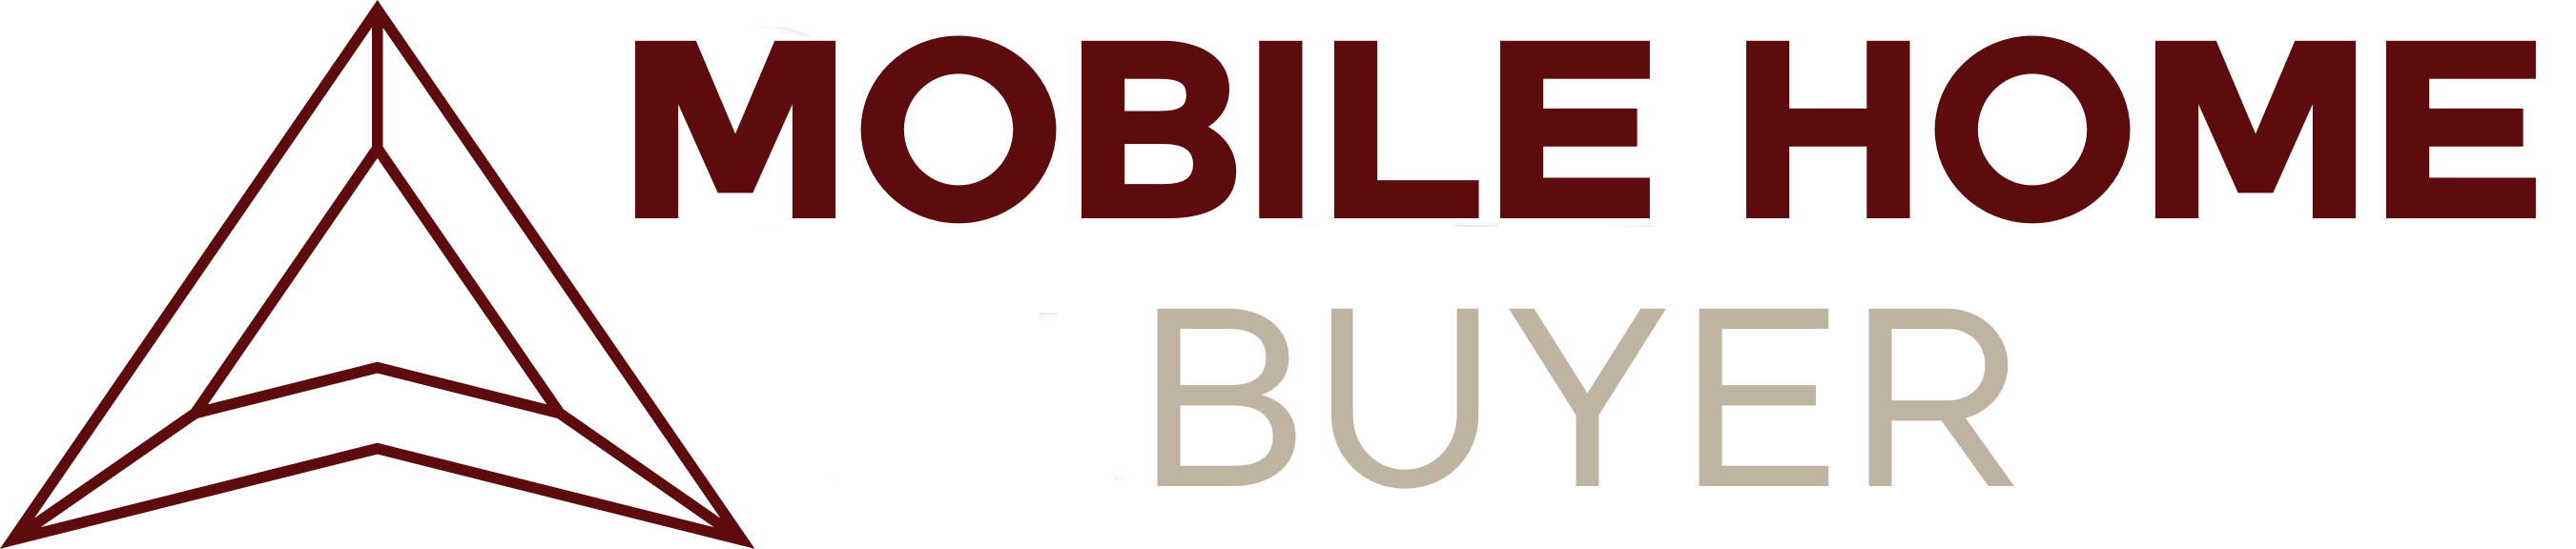 Mobile Home Buyer logo